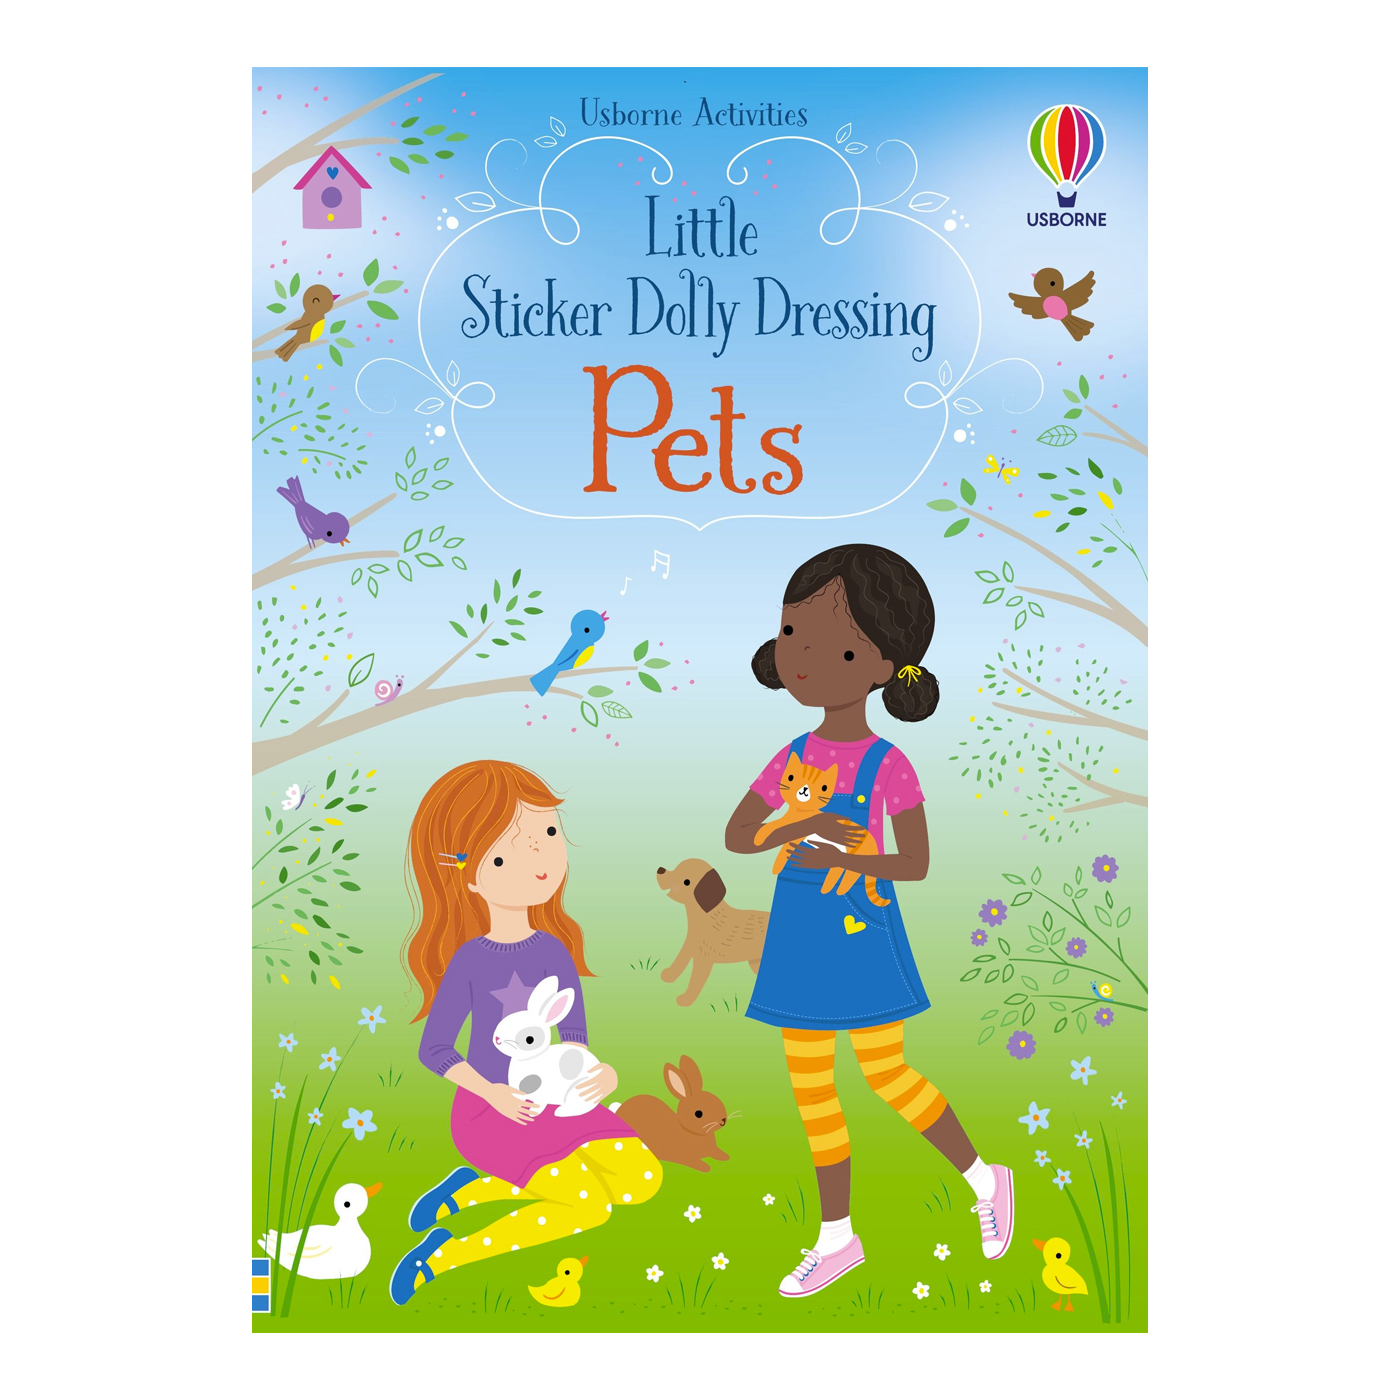  Little Sticker Dolly Dressing Pets